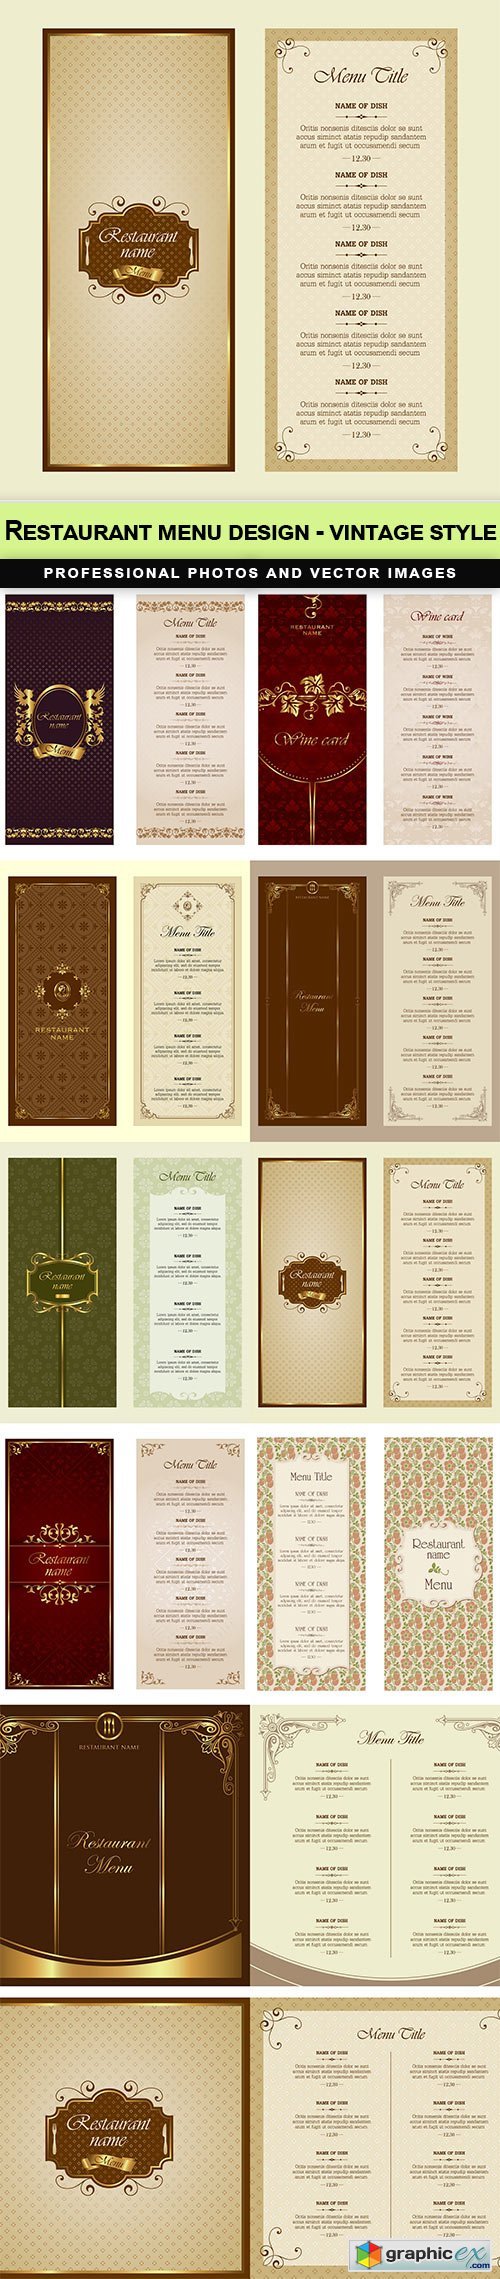 Restaurant menu design - vintage style - 9 EPS